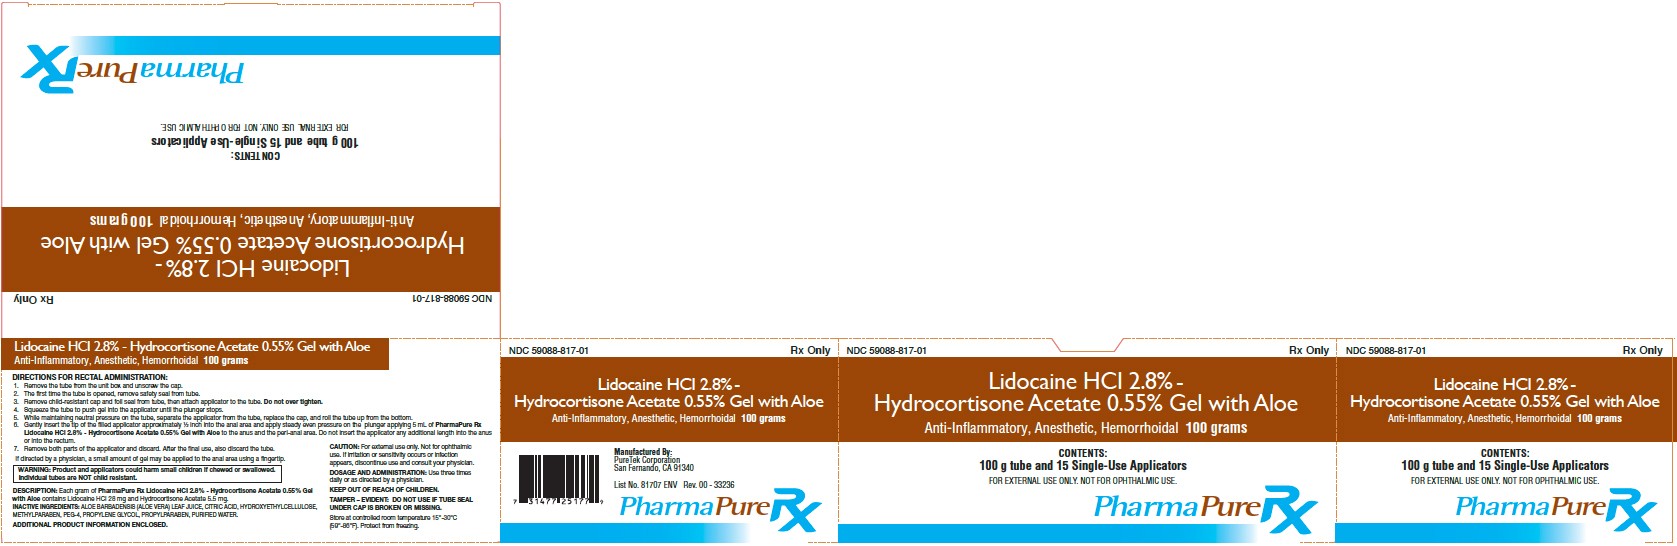 Lidocaine HCl - Hydrocortisone Acetate